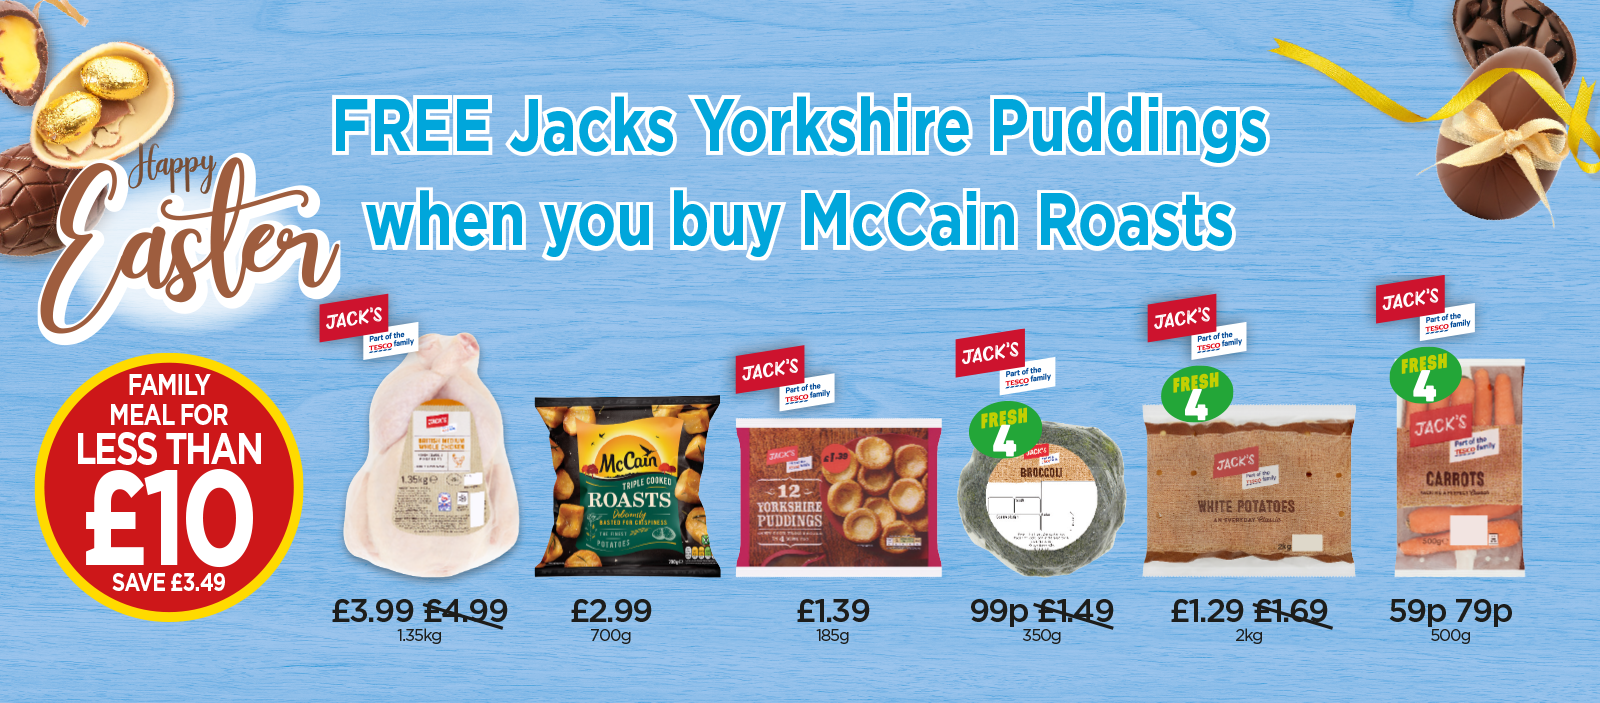 Jack's British Medium Whole Chicken, McCain Roasts, Yorkshire Puddings, Broccoli, White Potatoes, Carrots - FREE Jack's Yorkshire Puddings When You Buy McCain Roasts at Budgens